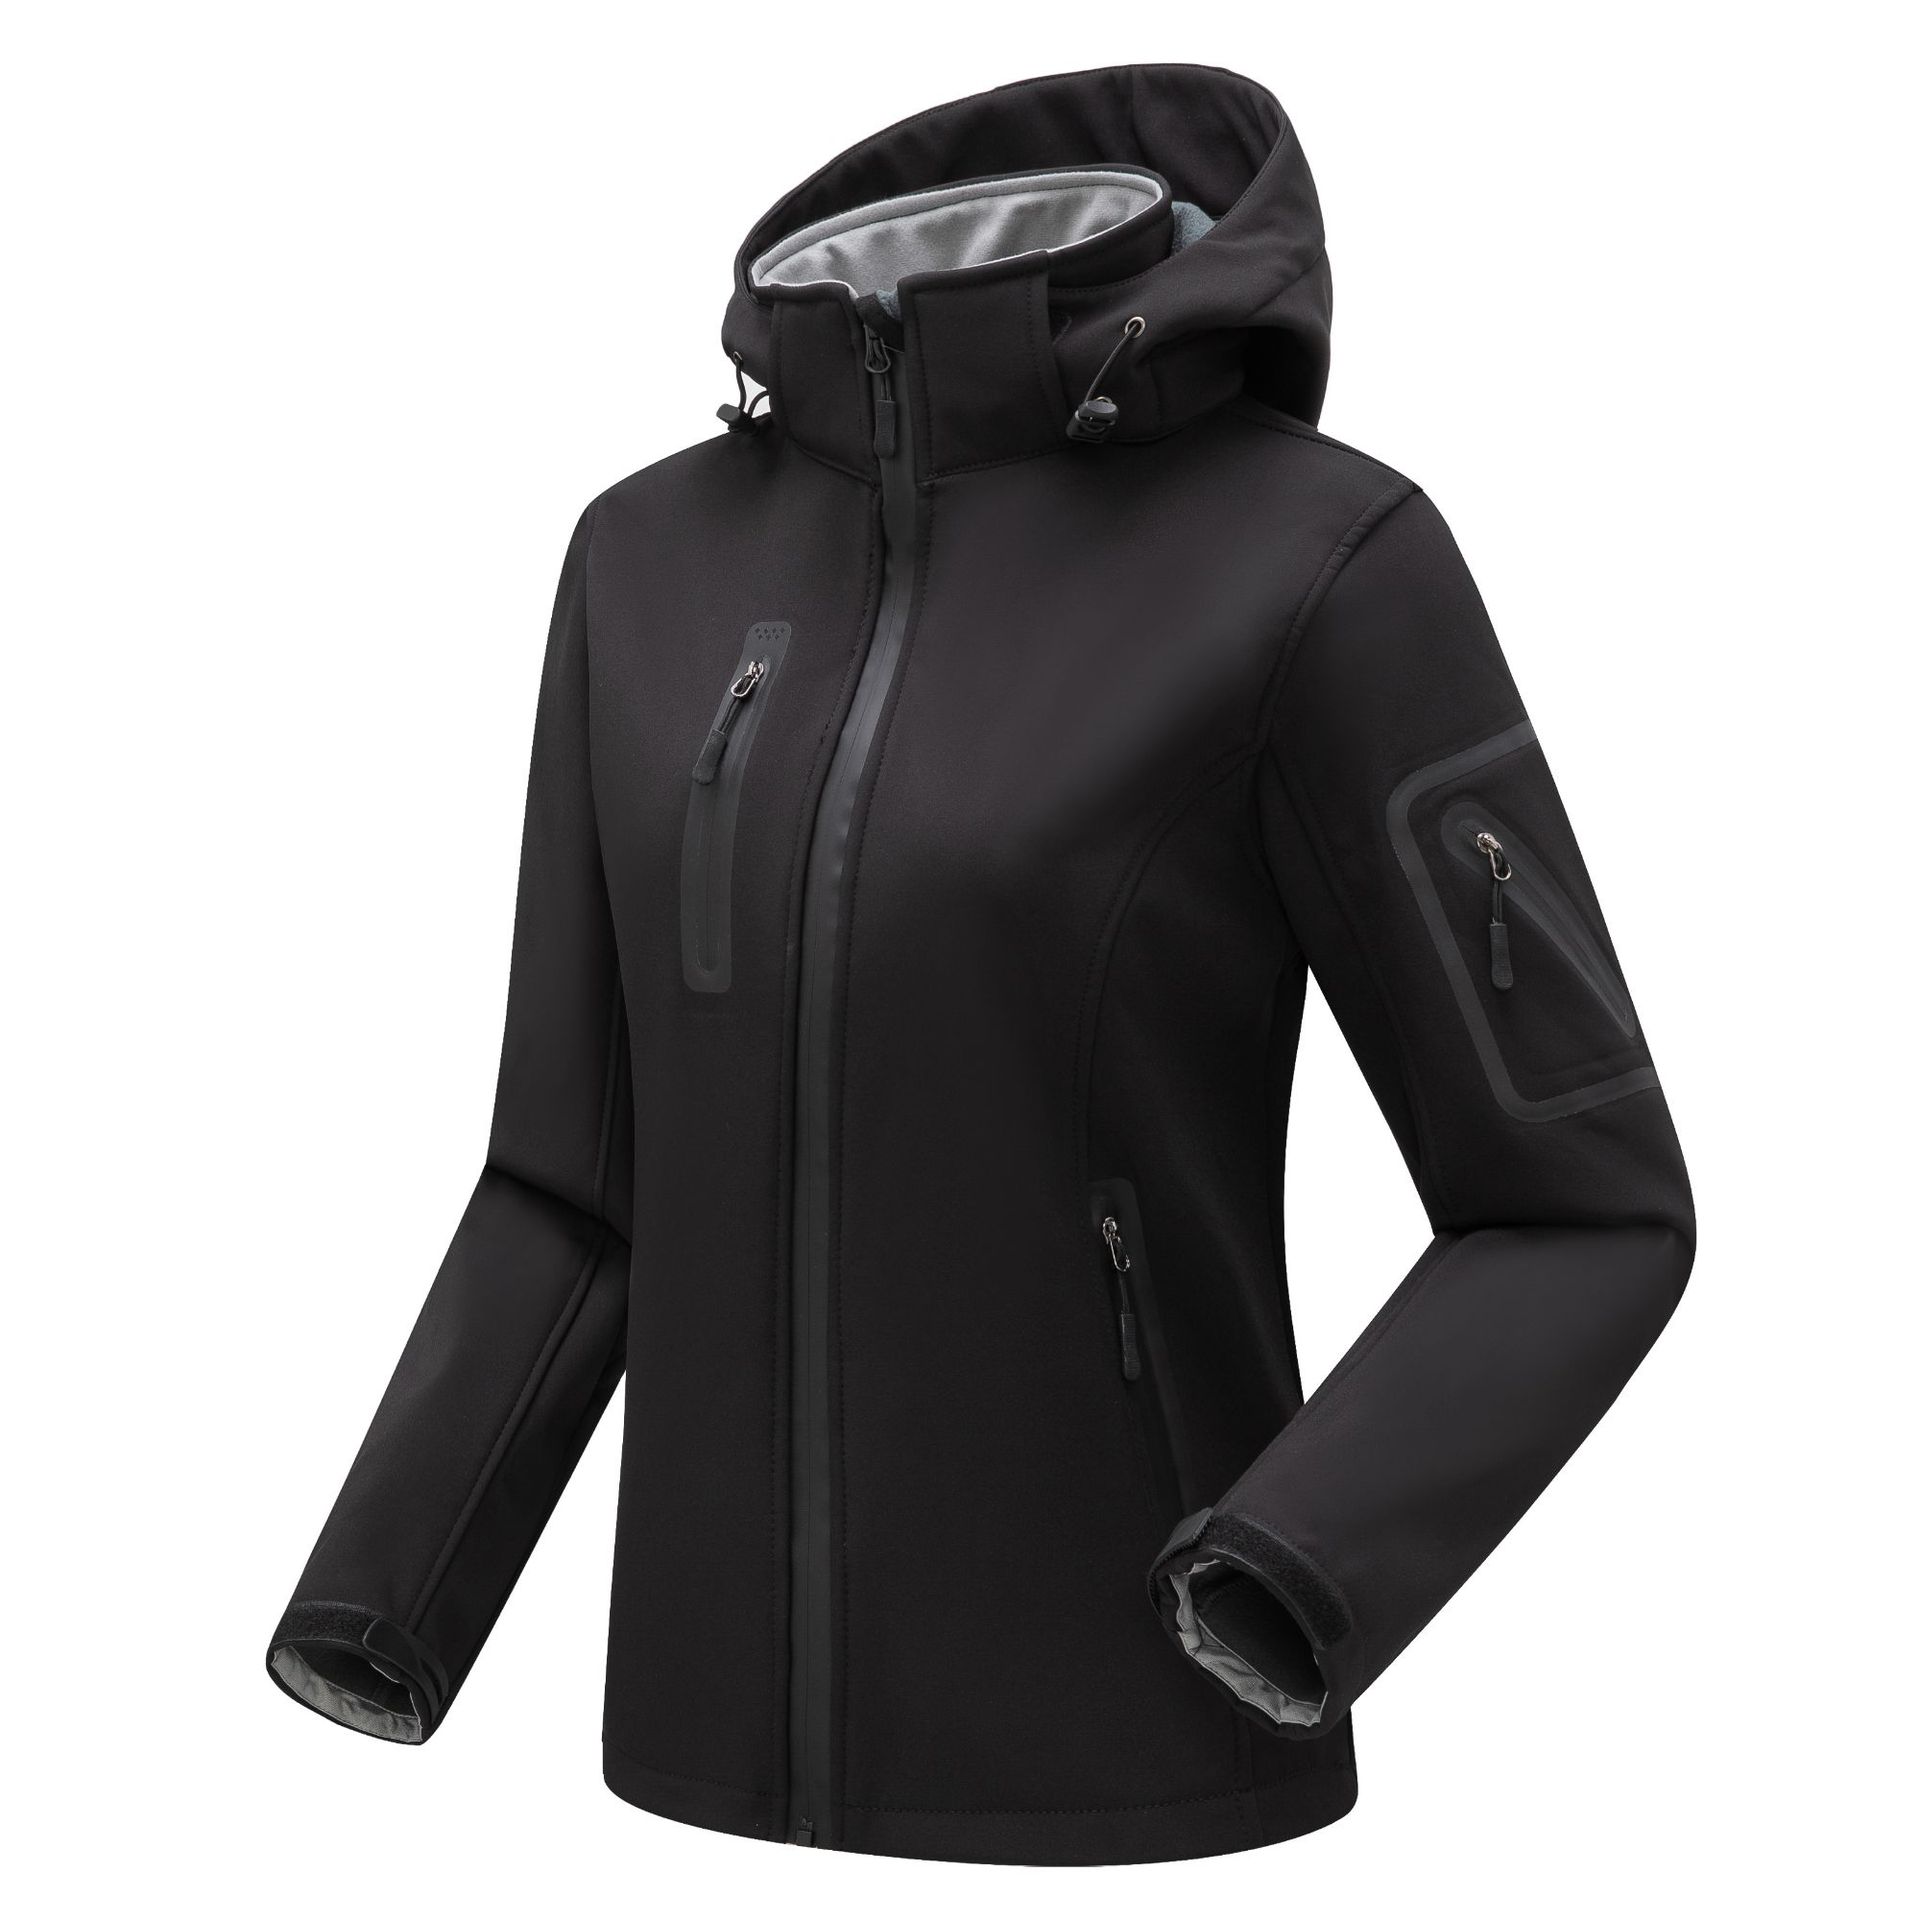 Gincci™Women's Softshell Jacket Windproof Water Resistant Outdoor Sport Camping Climbing Hiking Jacket Coat